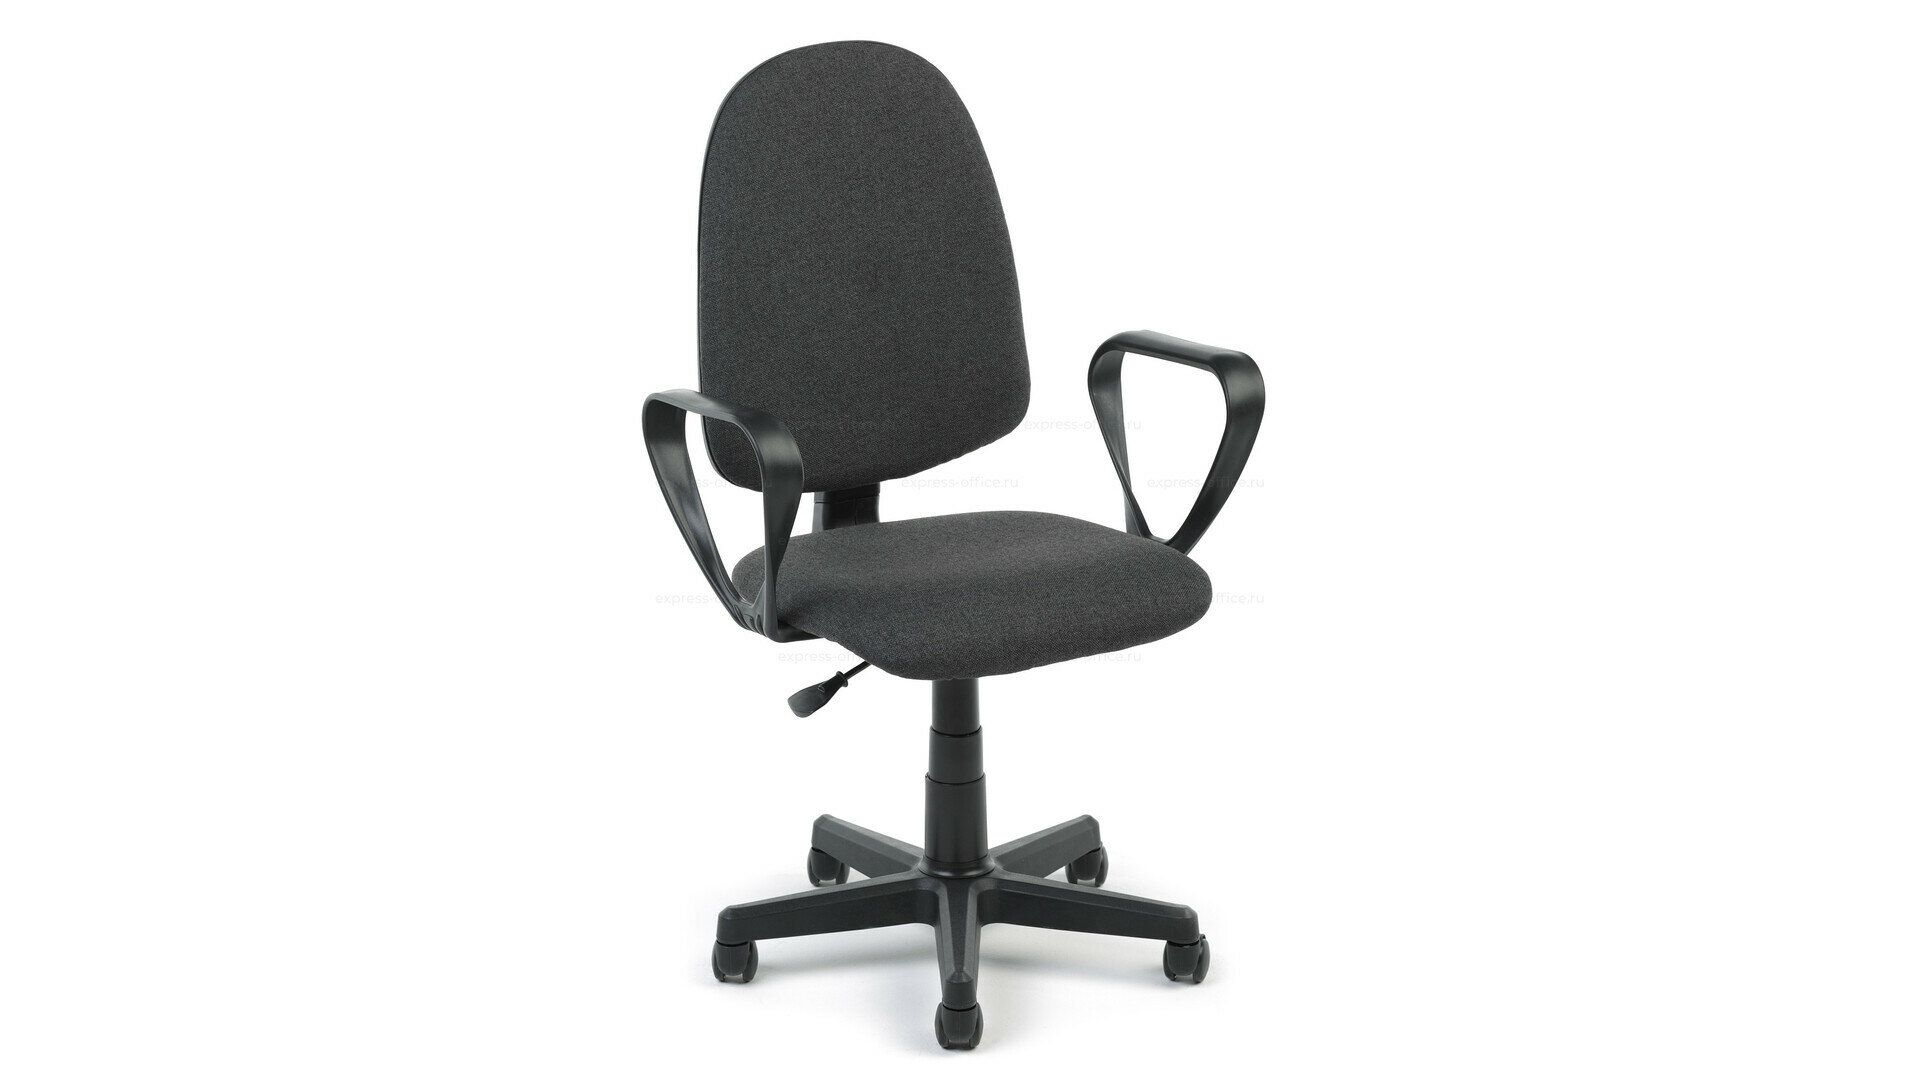 Офисное кресло Chairman Стандарт Престиж, обивка: текстиль